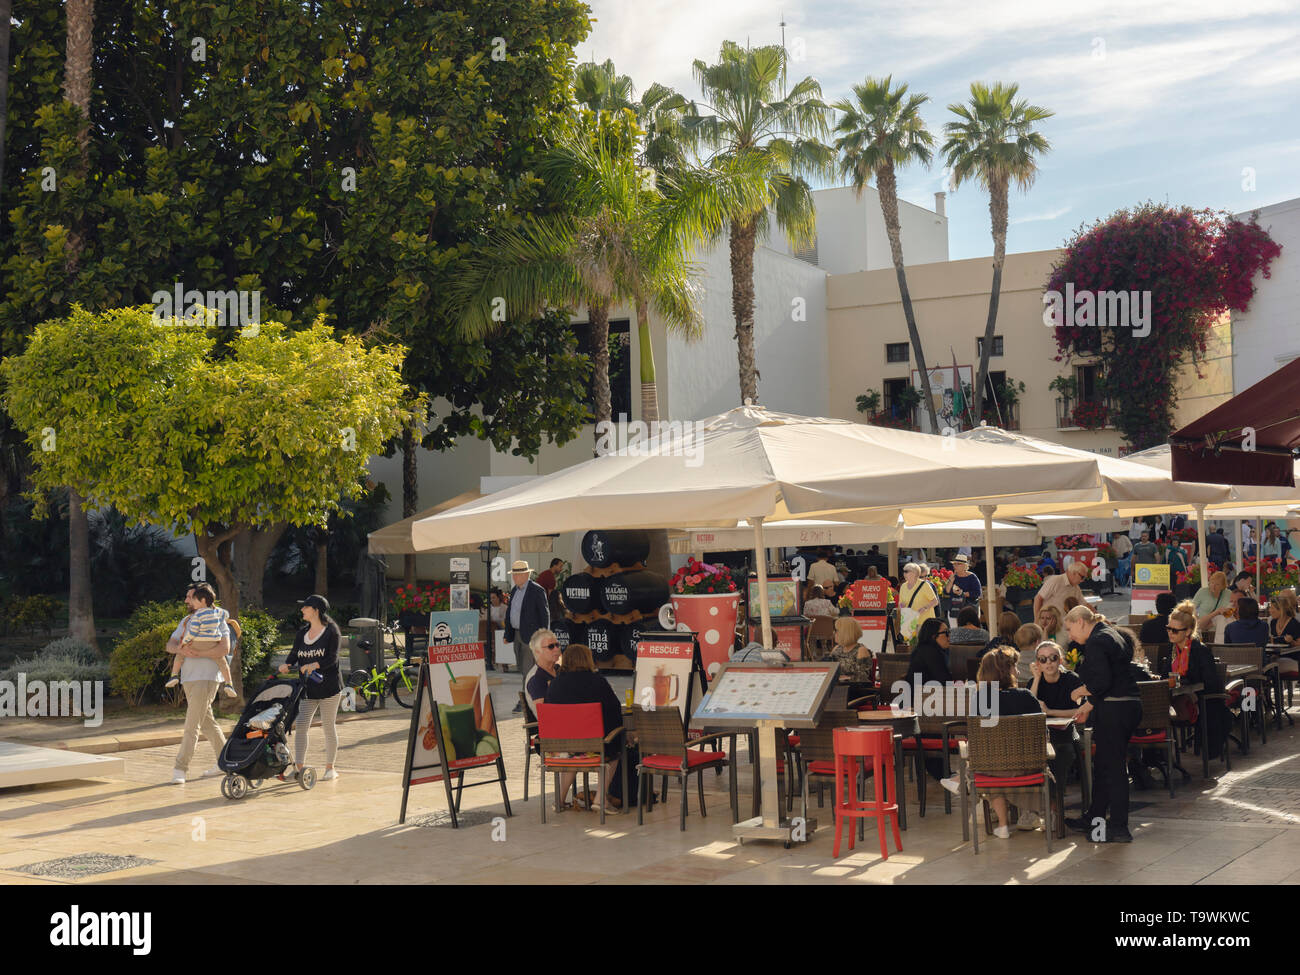 Les clients de prendre un verre sur la terrasse du bar El Pimpi sur le coin de la calle Zegri et Calle Alcazabilla, Malaga, Costa del Sol, Malaga Province, Andal Banque D'Images